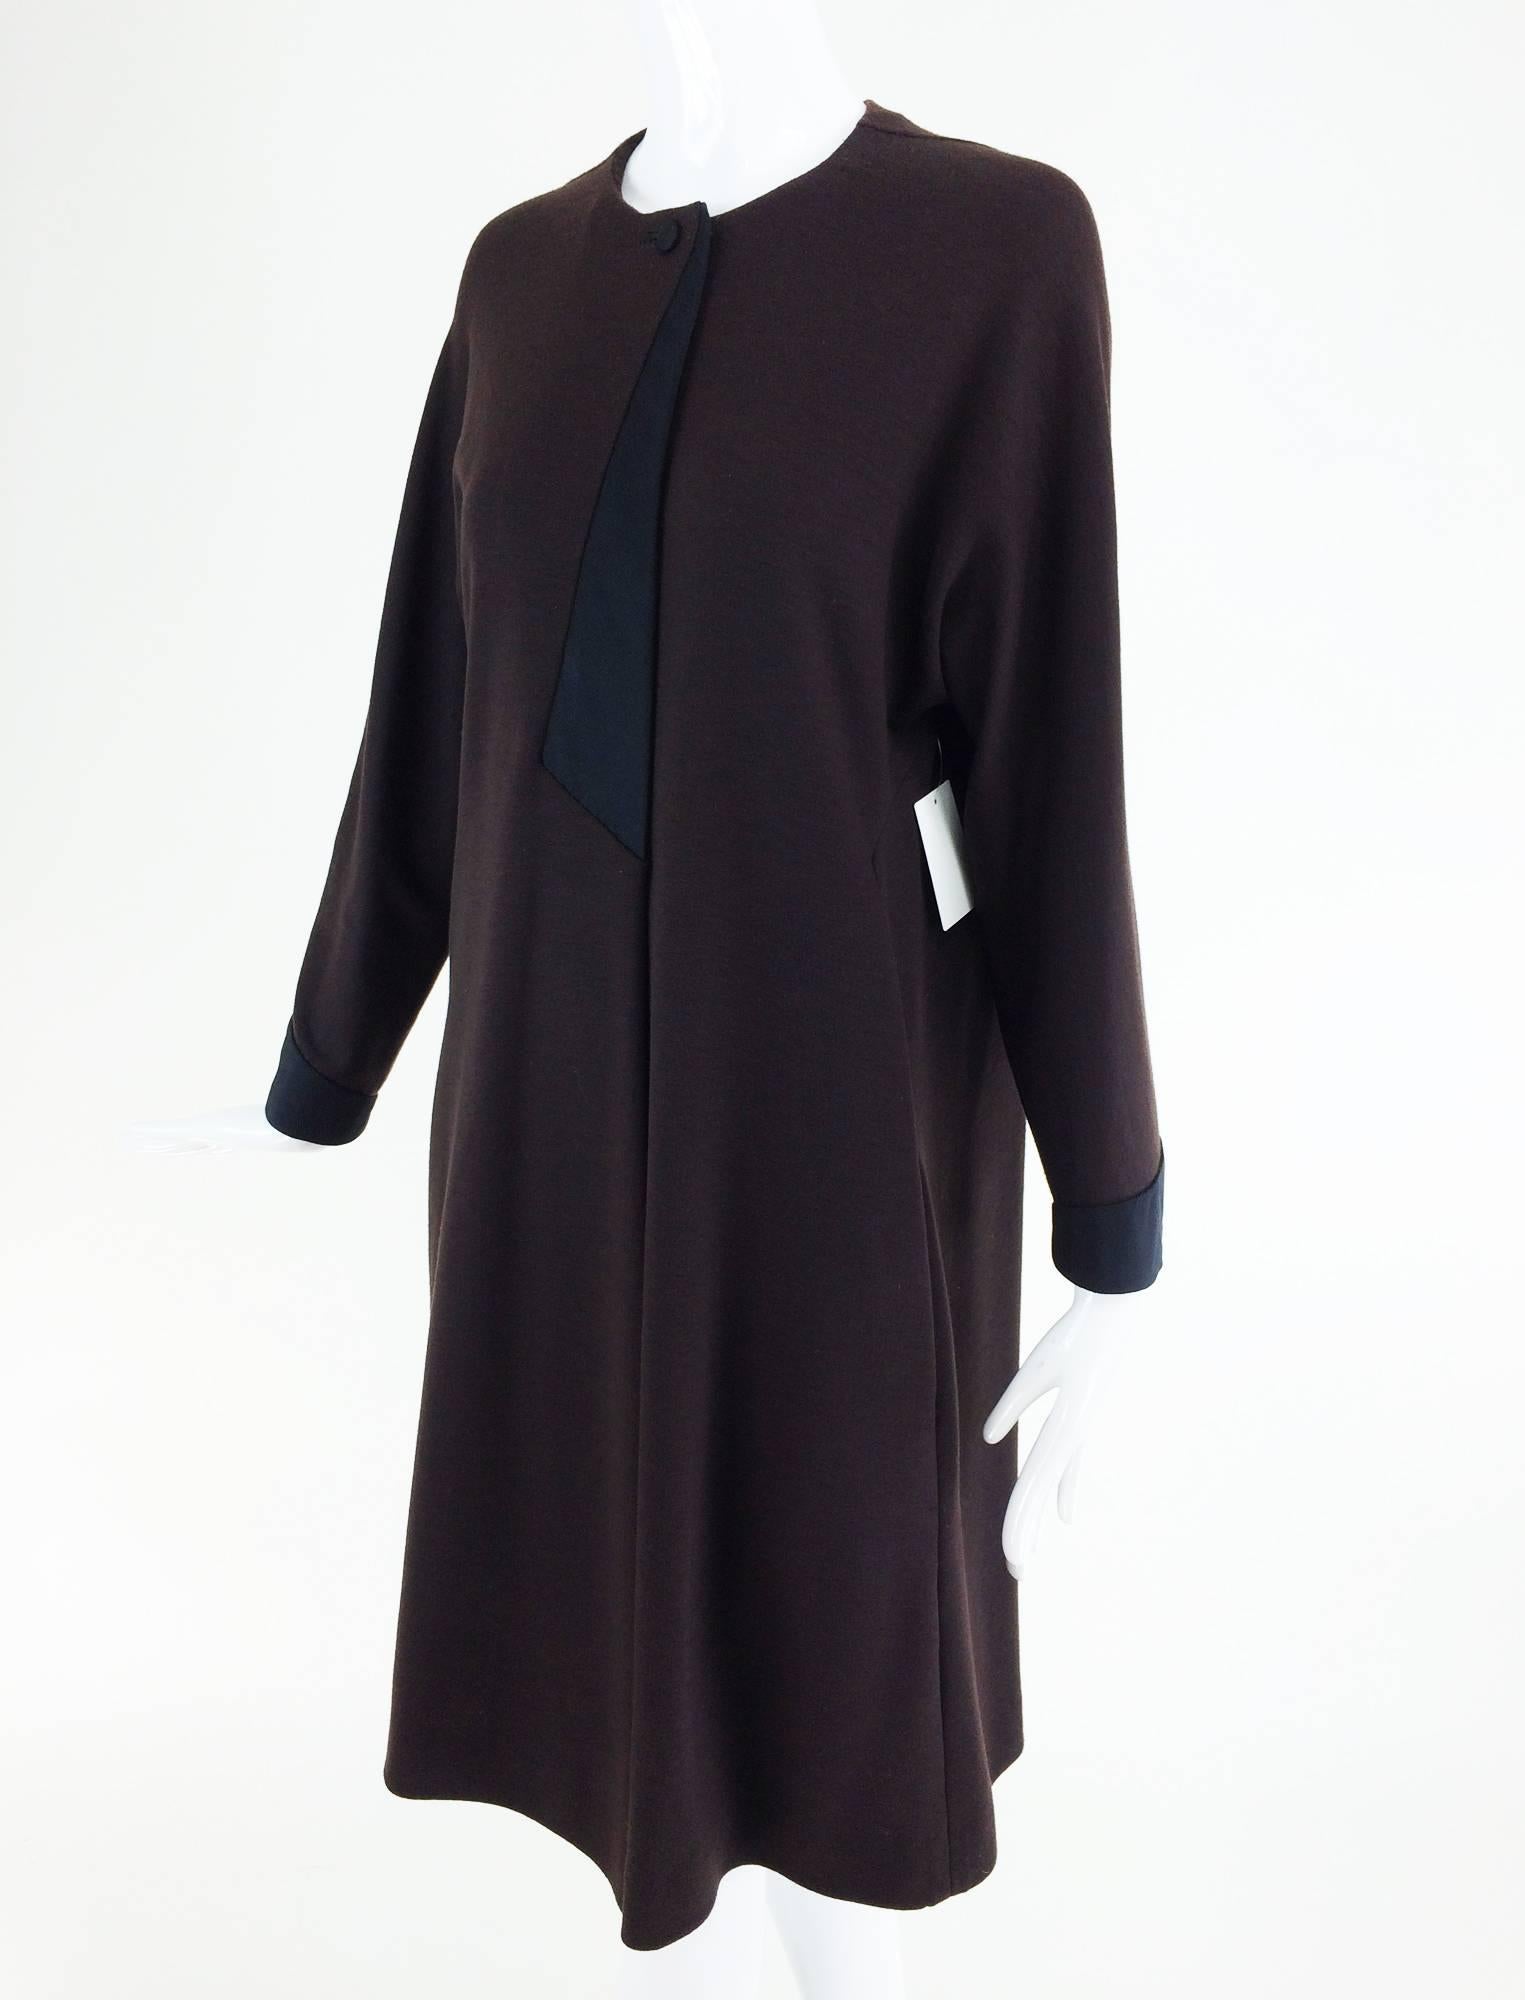 Geffrey Beene brown knit tent dress with black silk twill trims 1980s 3